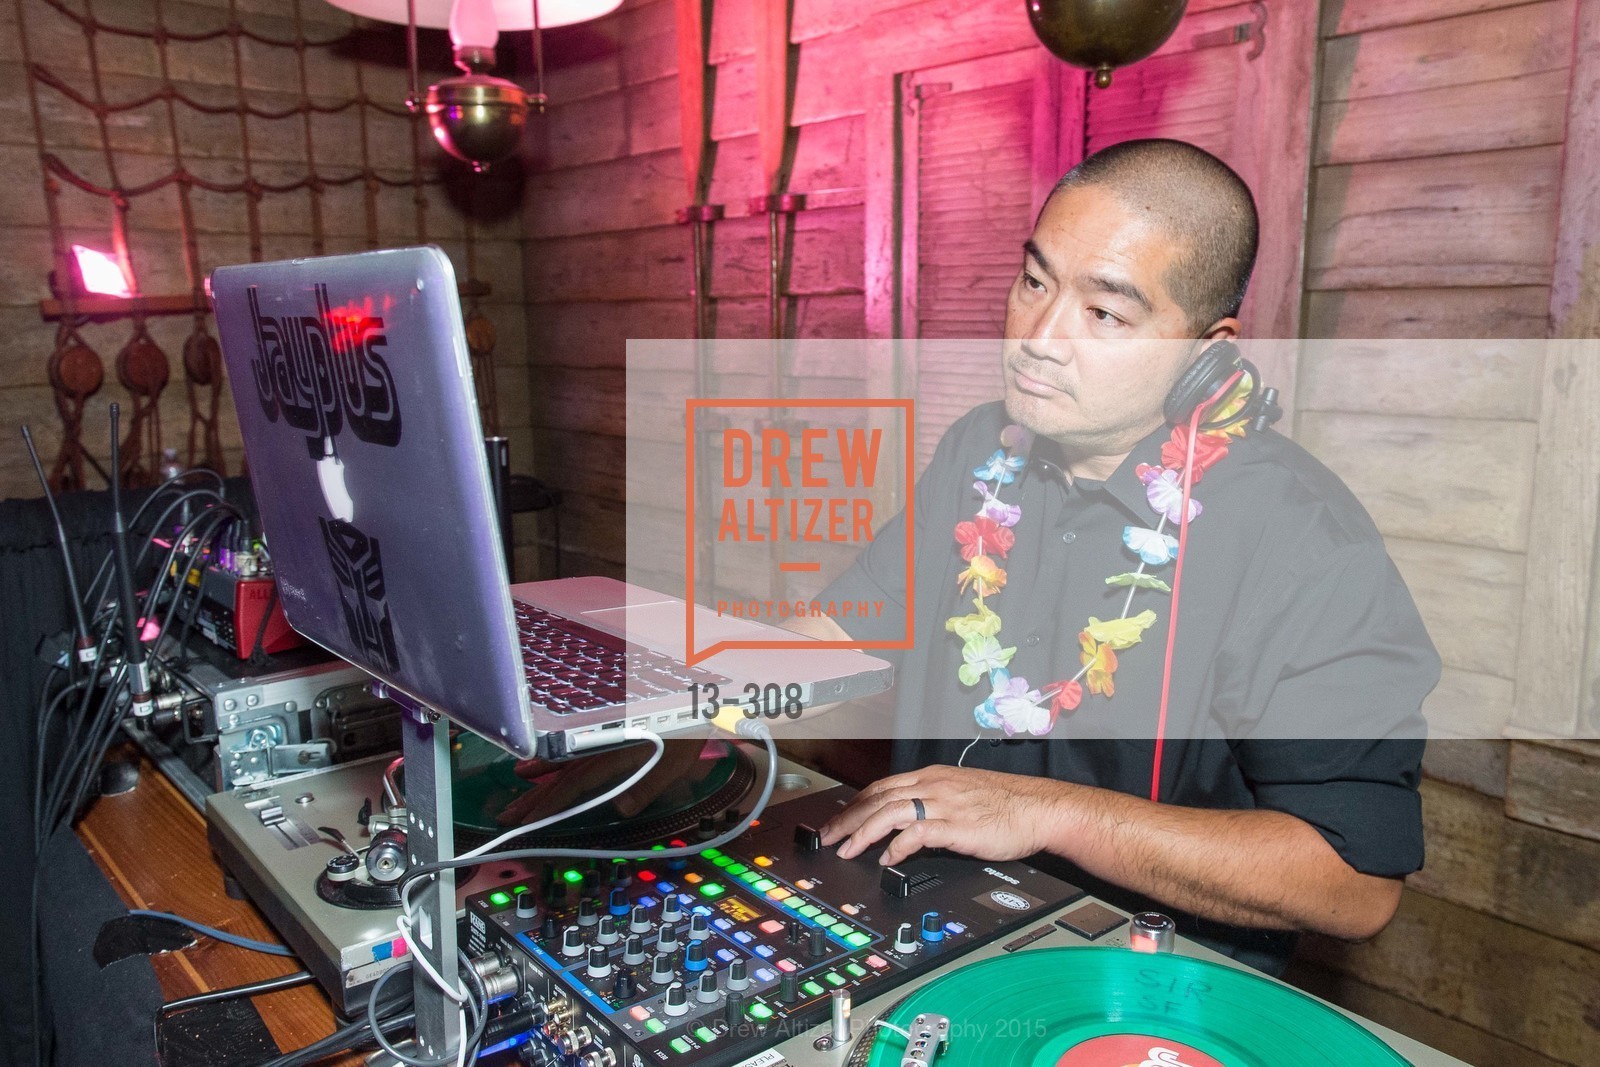 DJ, Photo #13-308